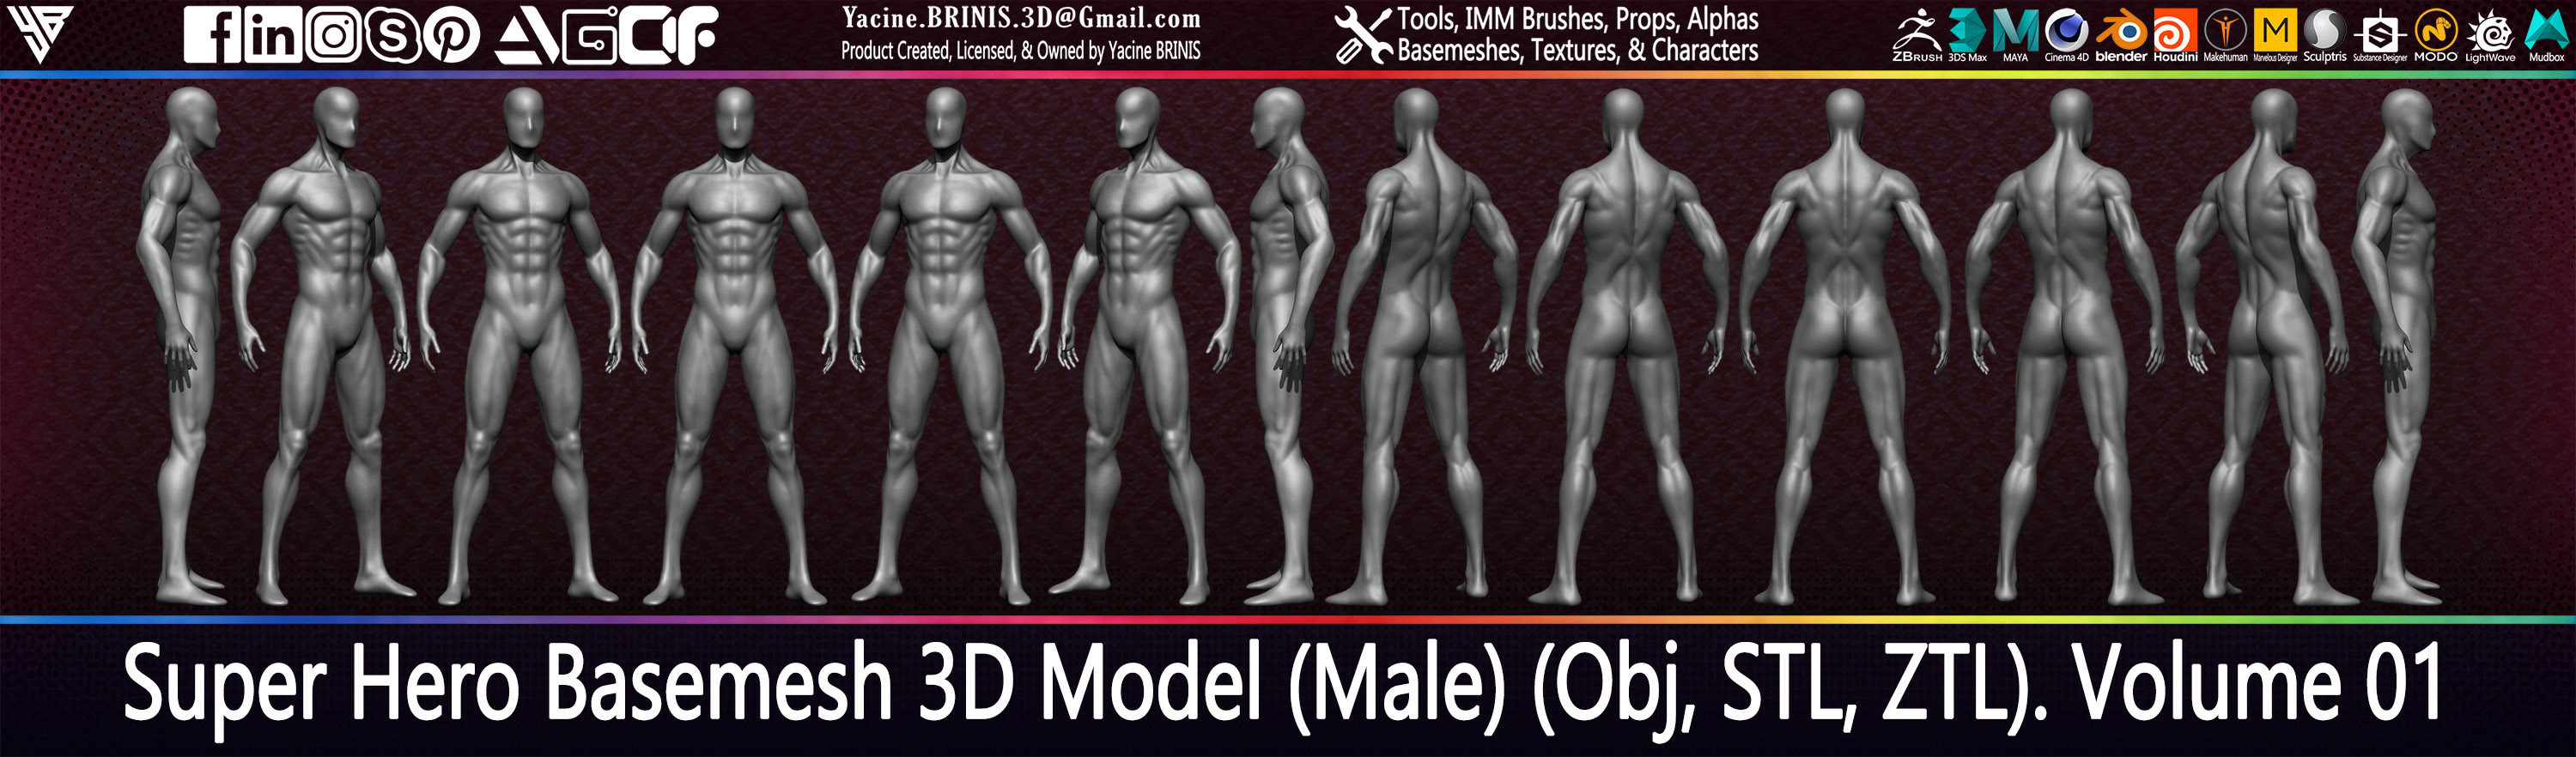 Super Hero Basemesh 3D Model Male By Yacine BRINIS Vol 01 Set 007